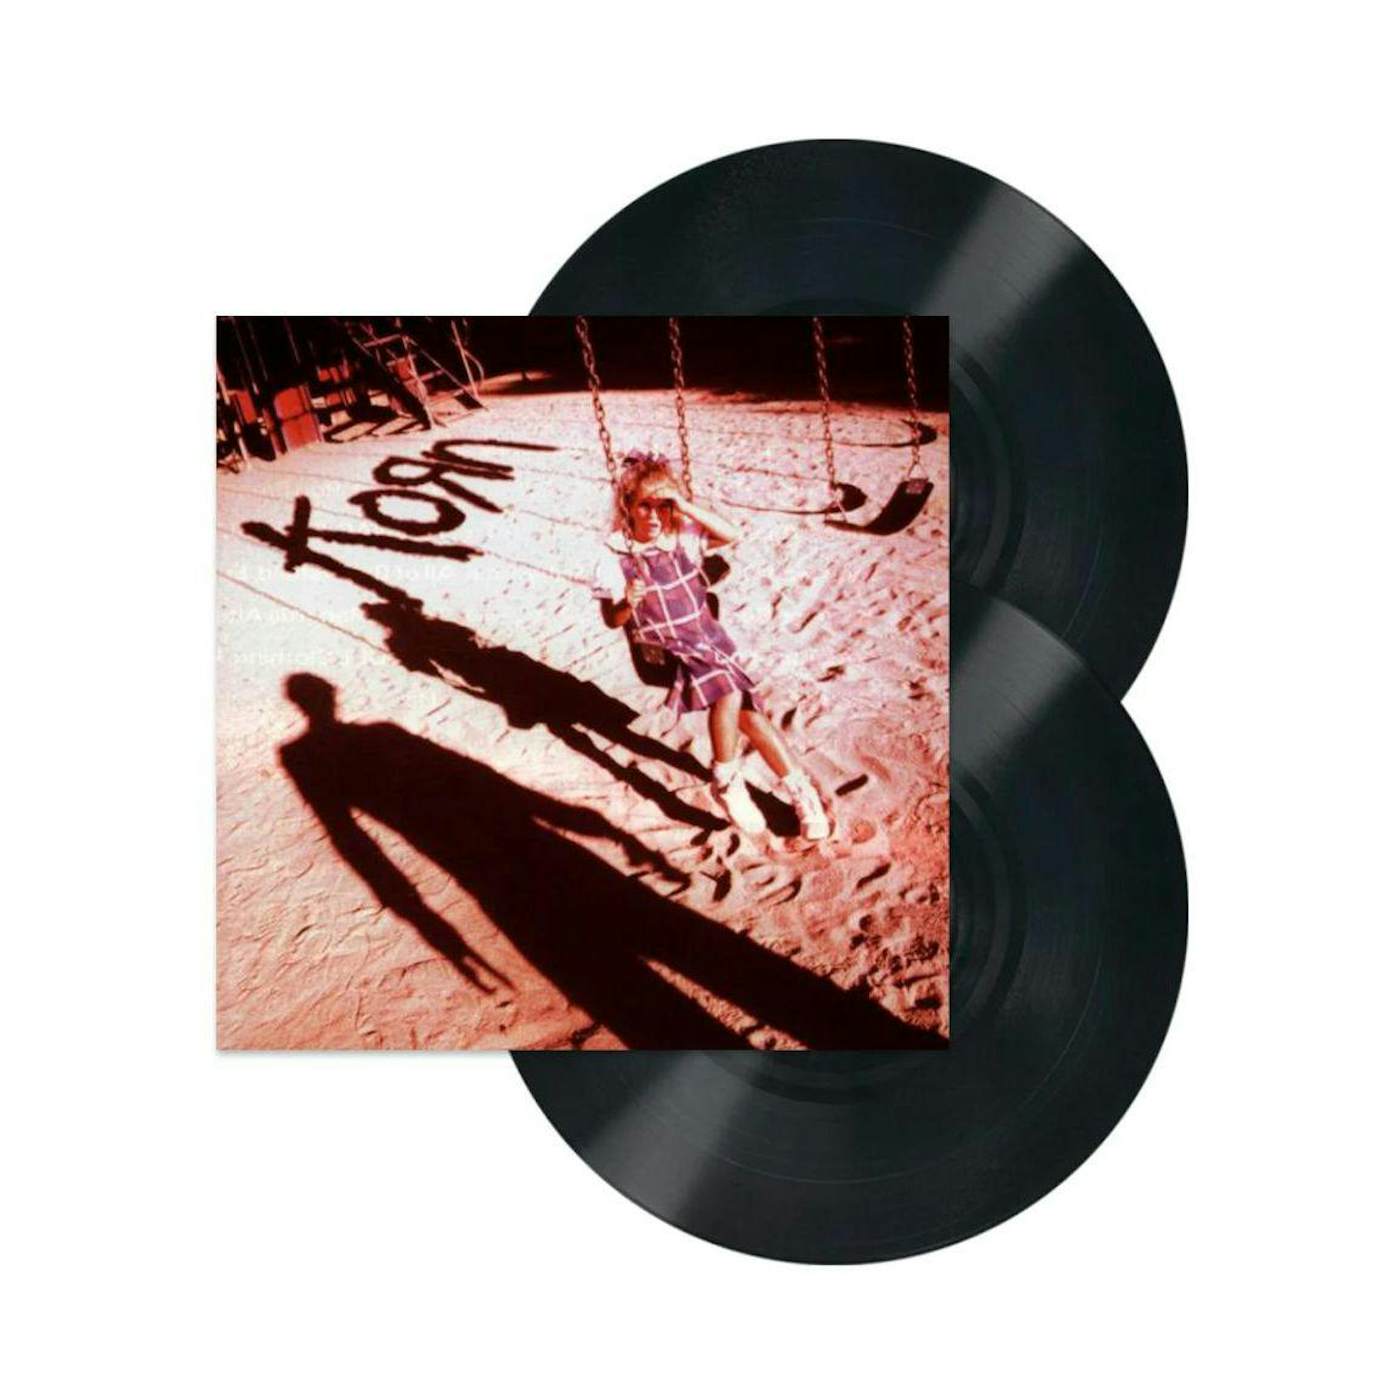  Korn Vinyl Record